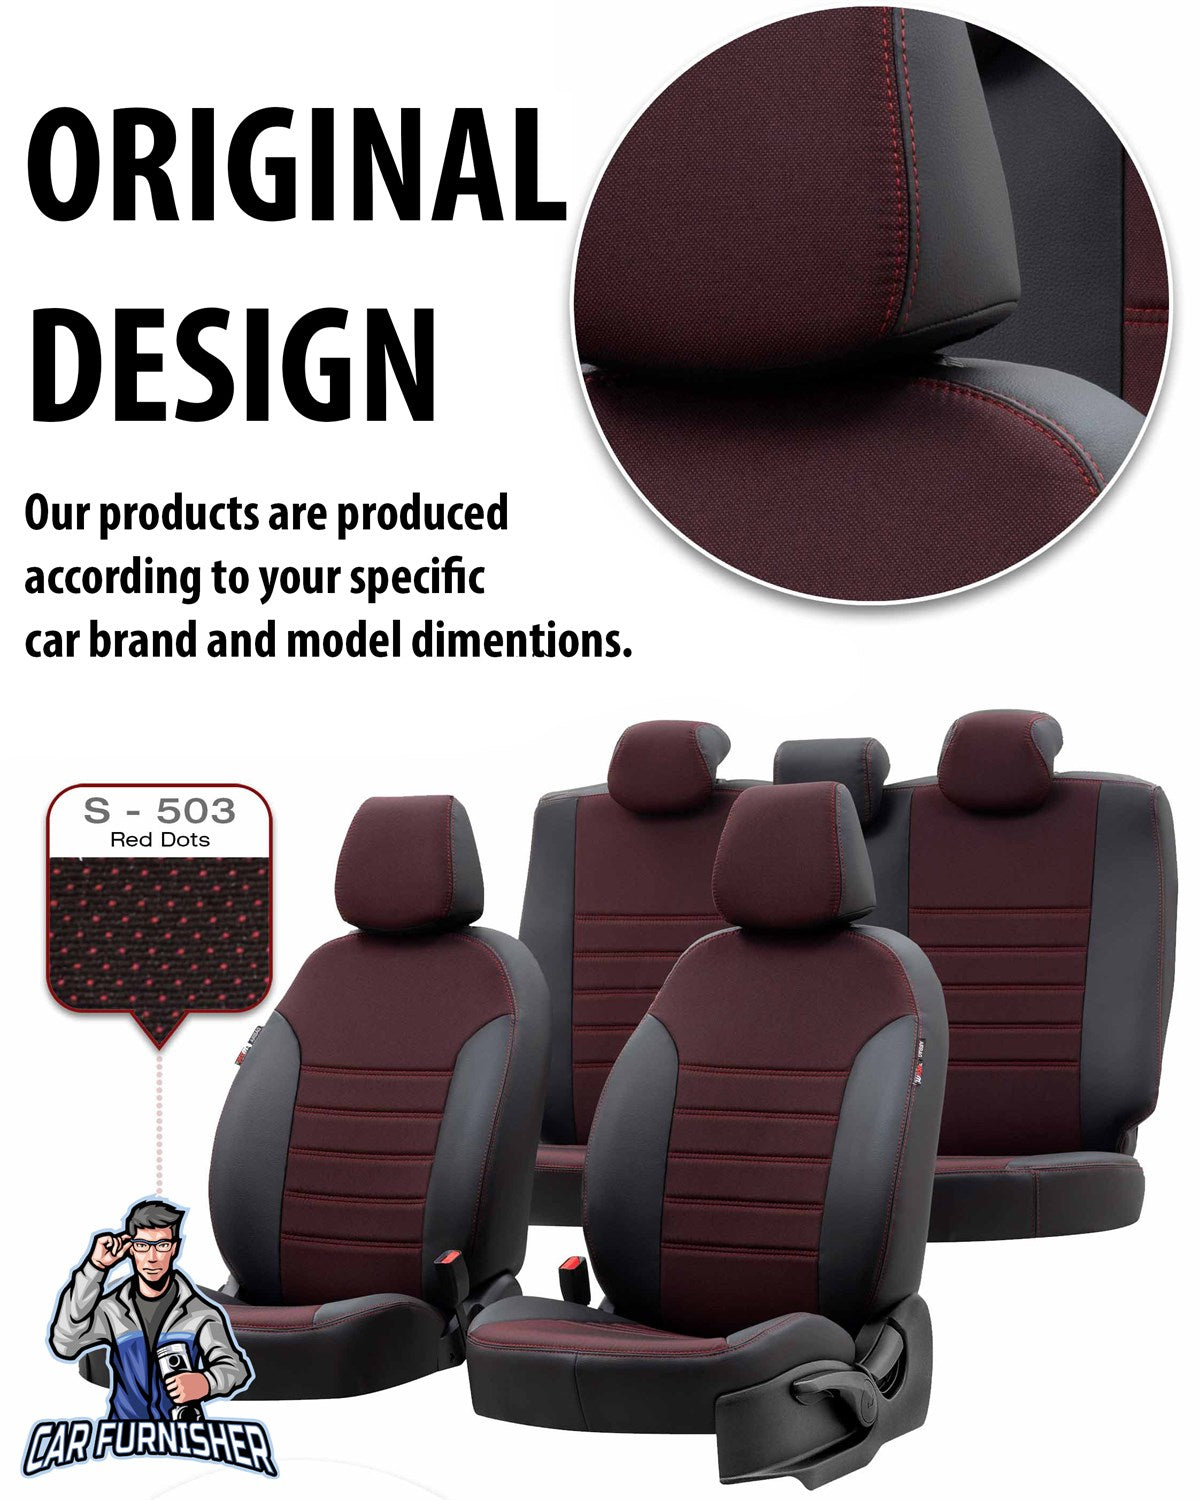 Peugeot 108 Seat Cover Paris Leather & Jacquard Design Black Leather & Jacquard Fabric